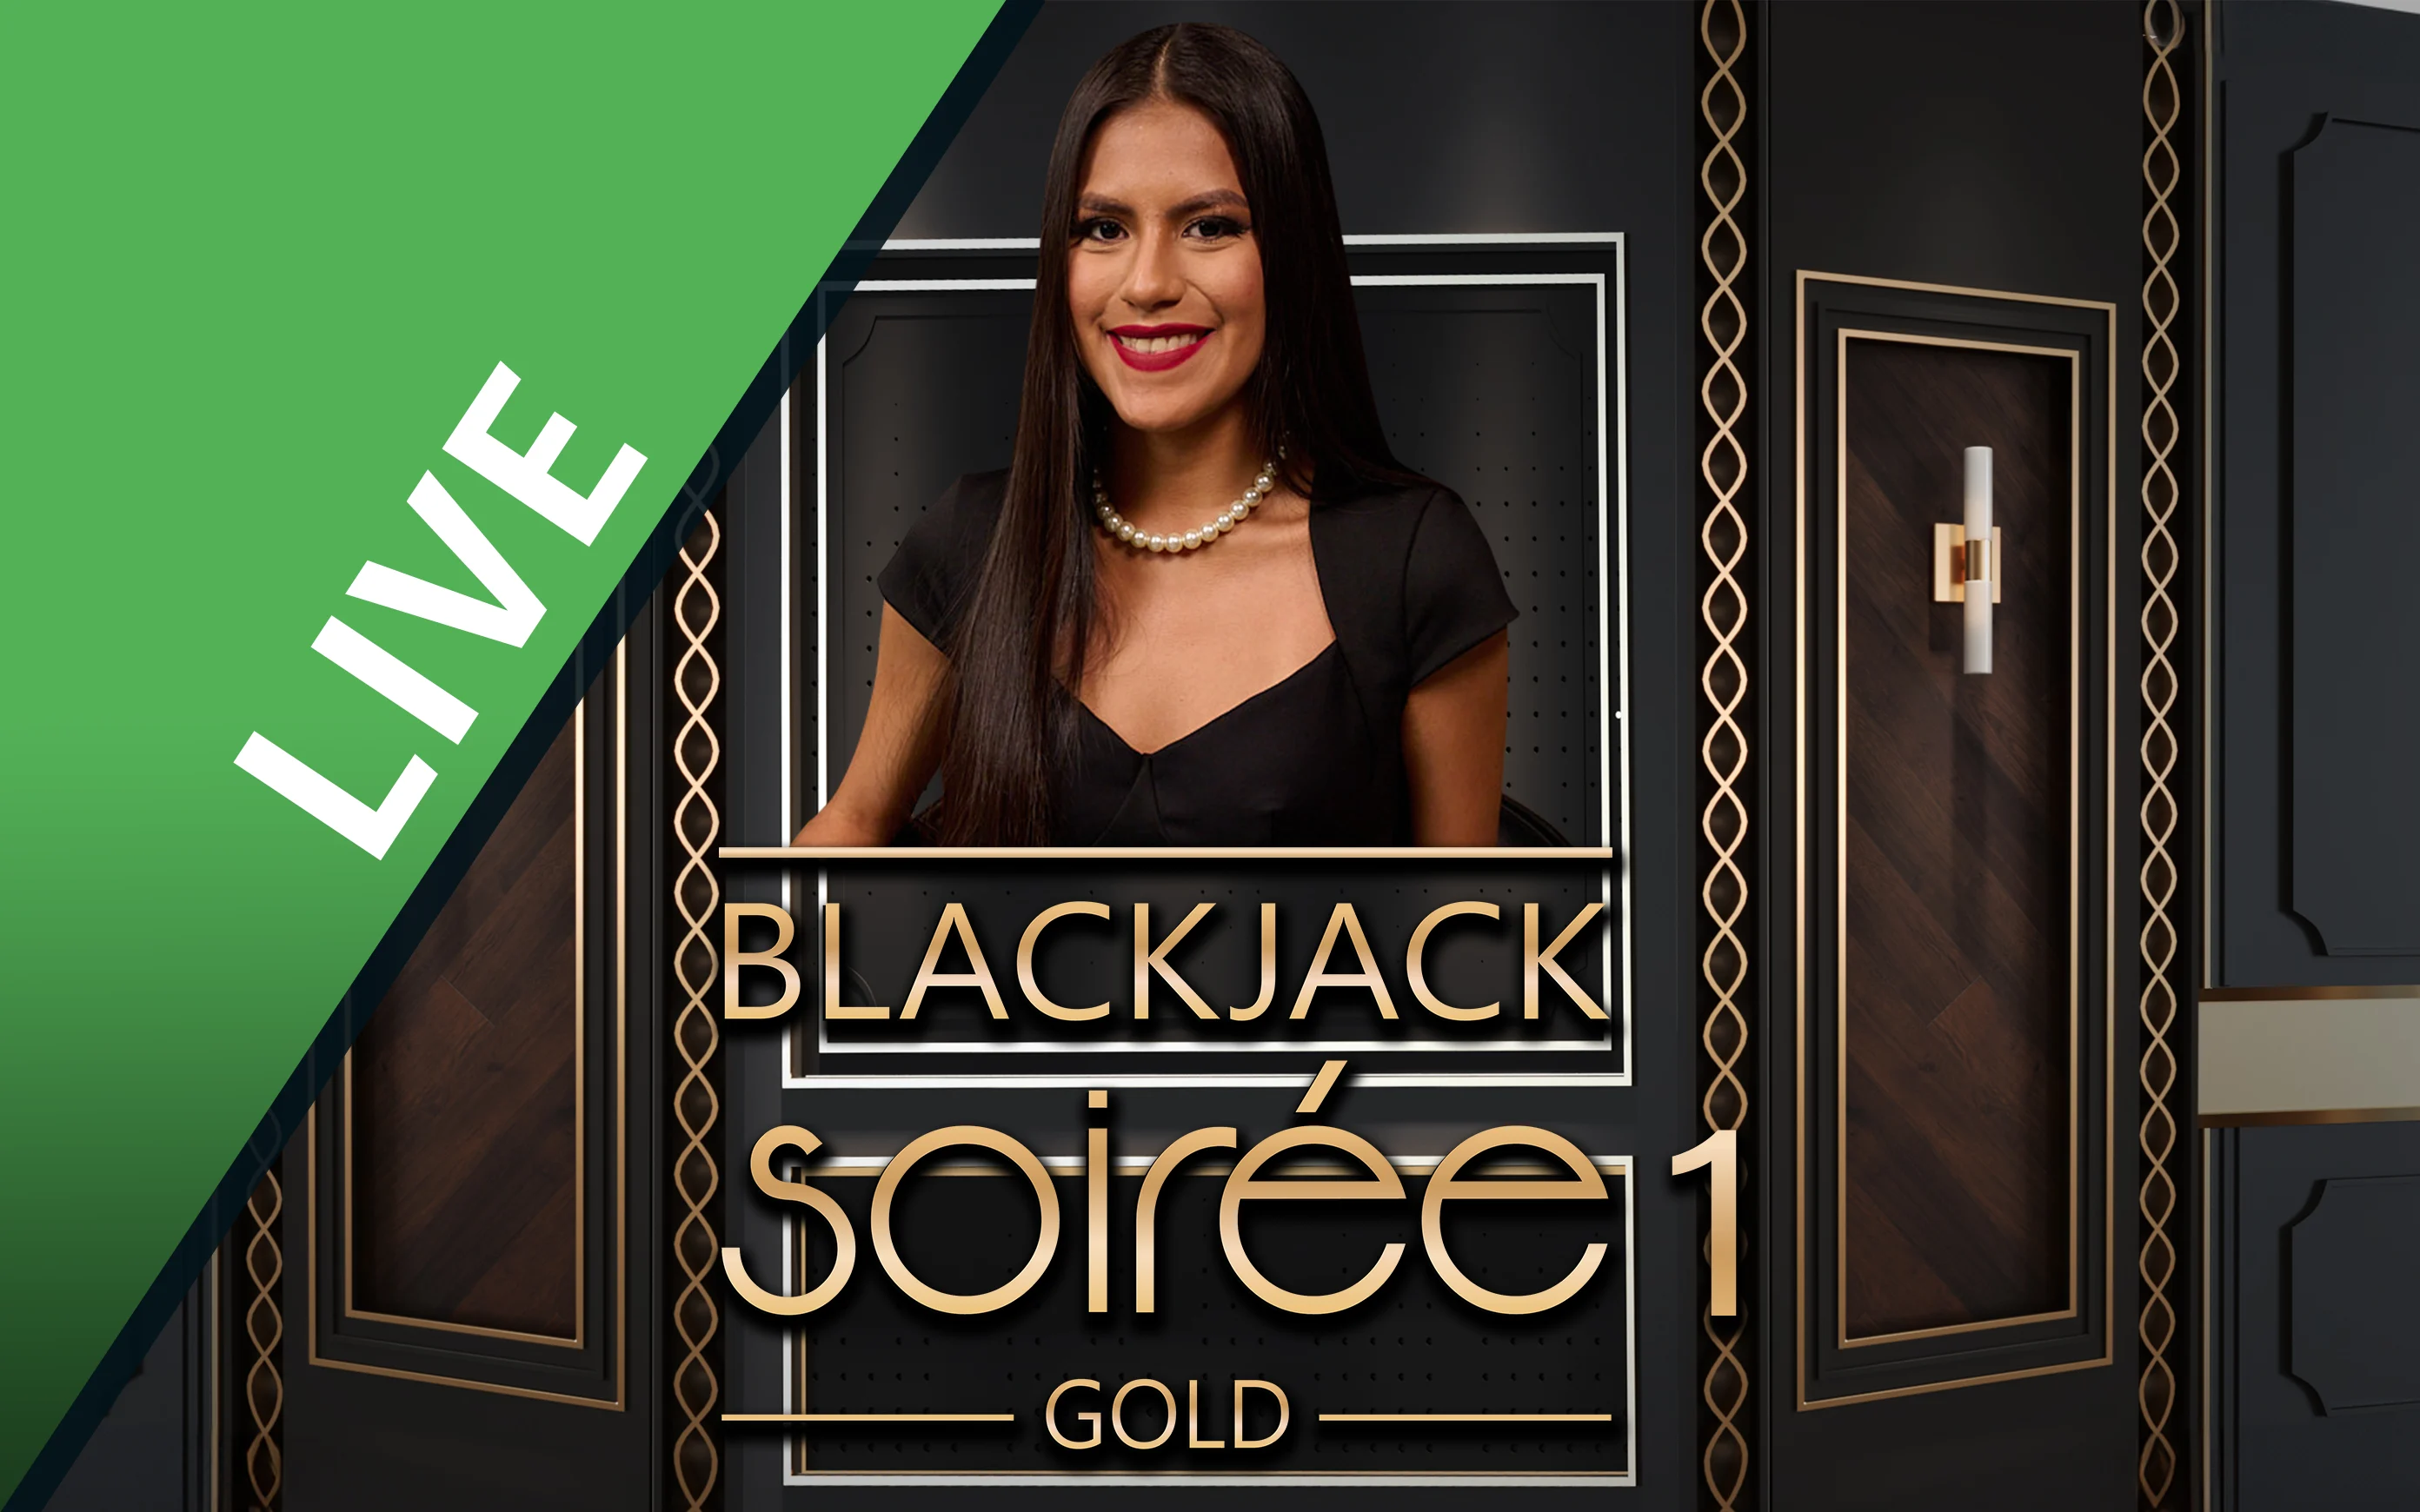 Играйте в Blackjack Soirée Gold 1 в онлайн-казино Starcasino.be